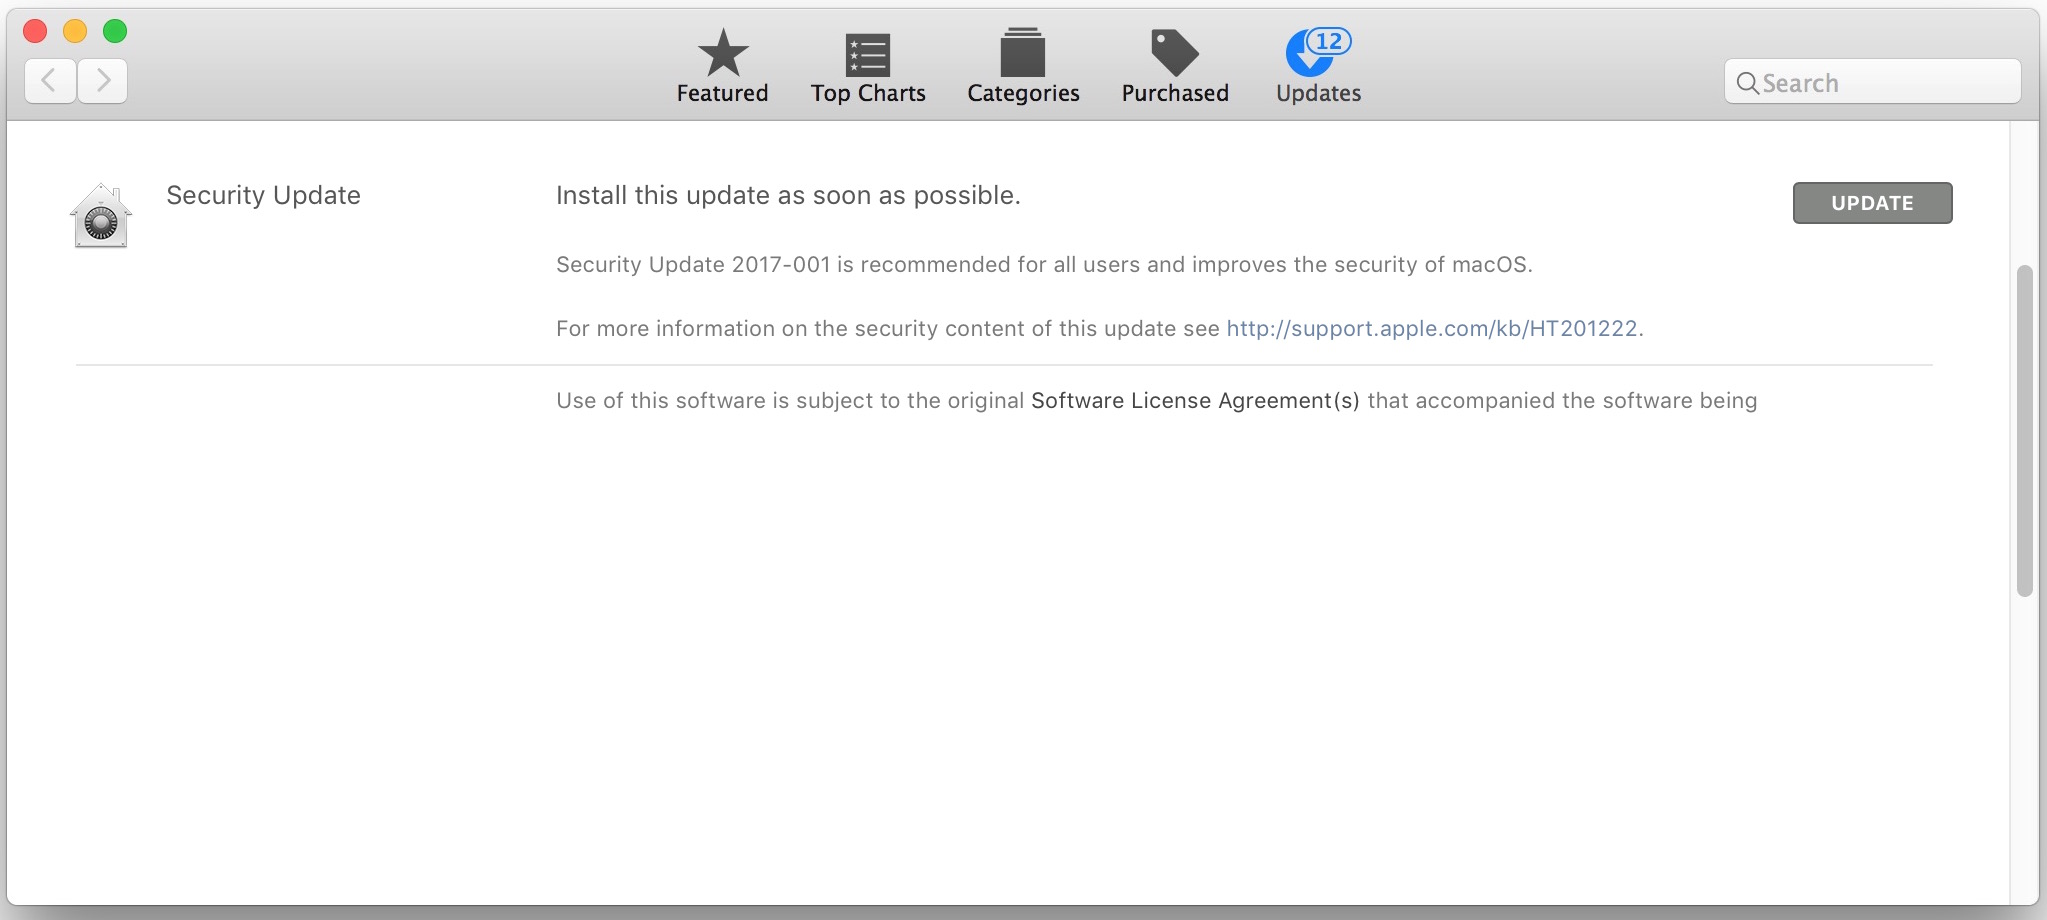 Security Update for macOS High Sierra fixes root password login bug